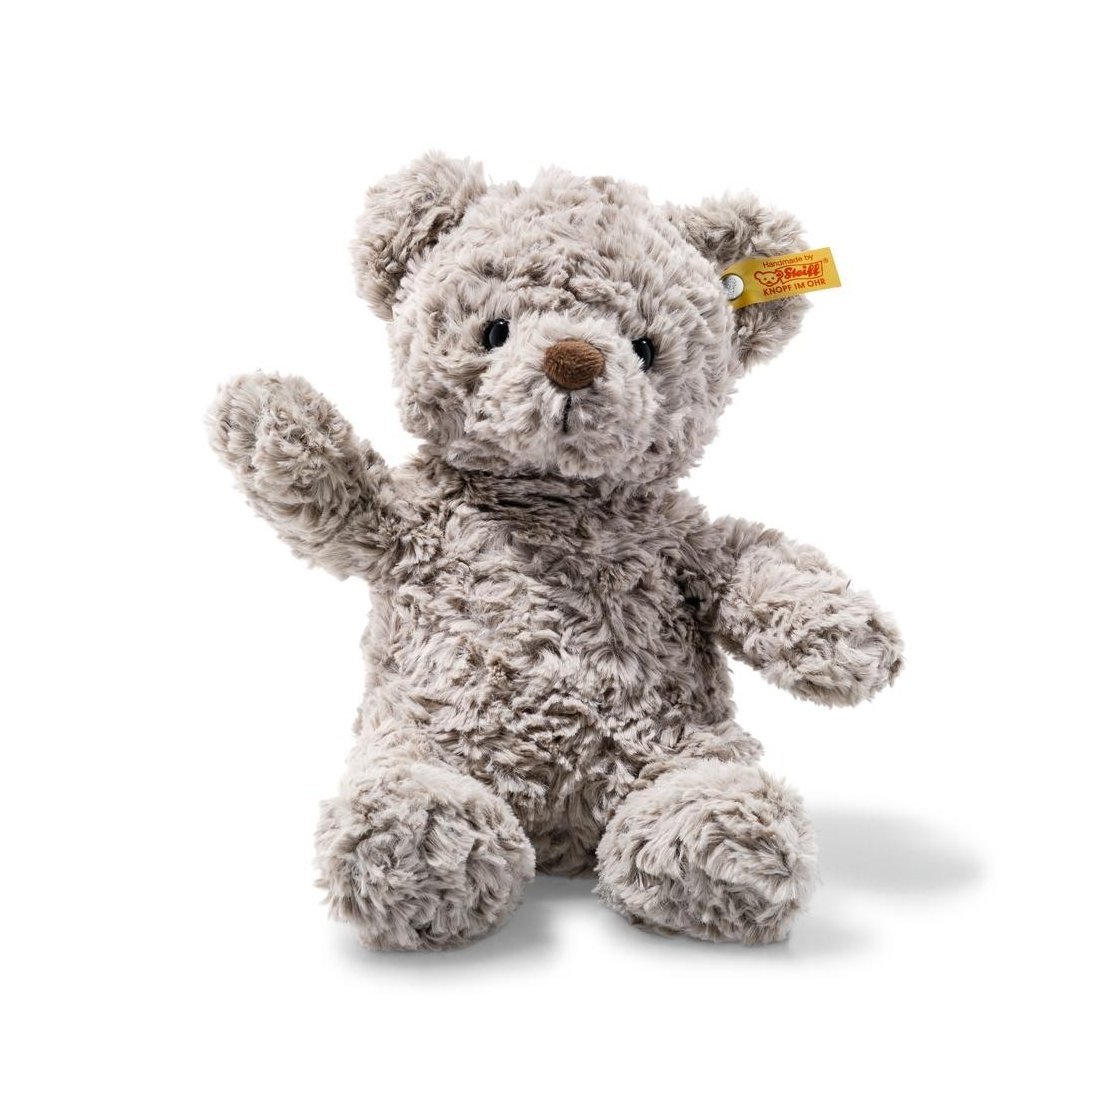 Steiff Teddybär Honey grau 28cm | Kuscheltier.Boutique